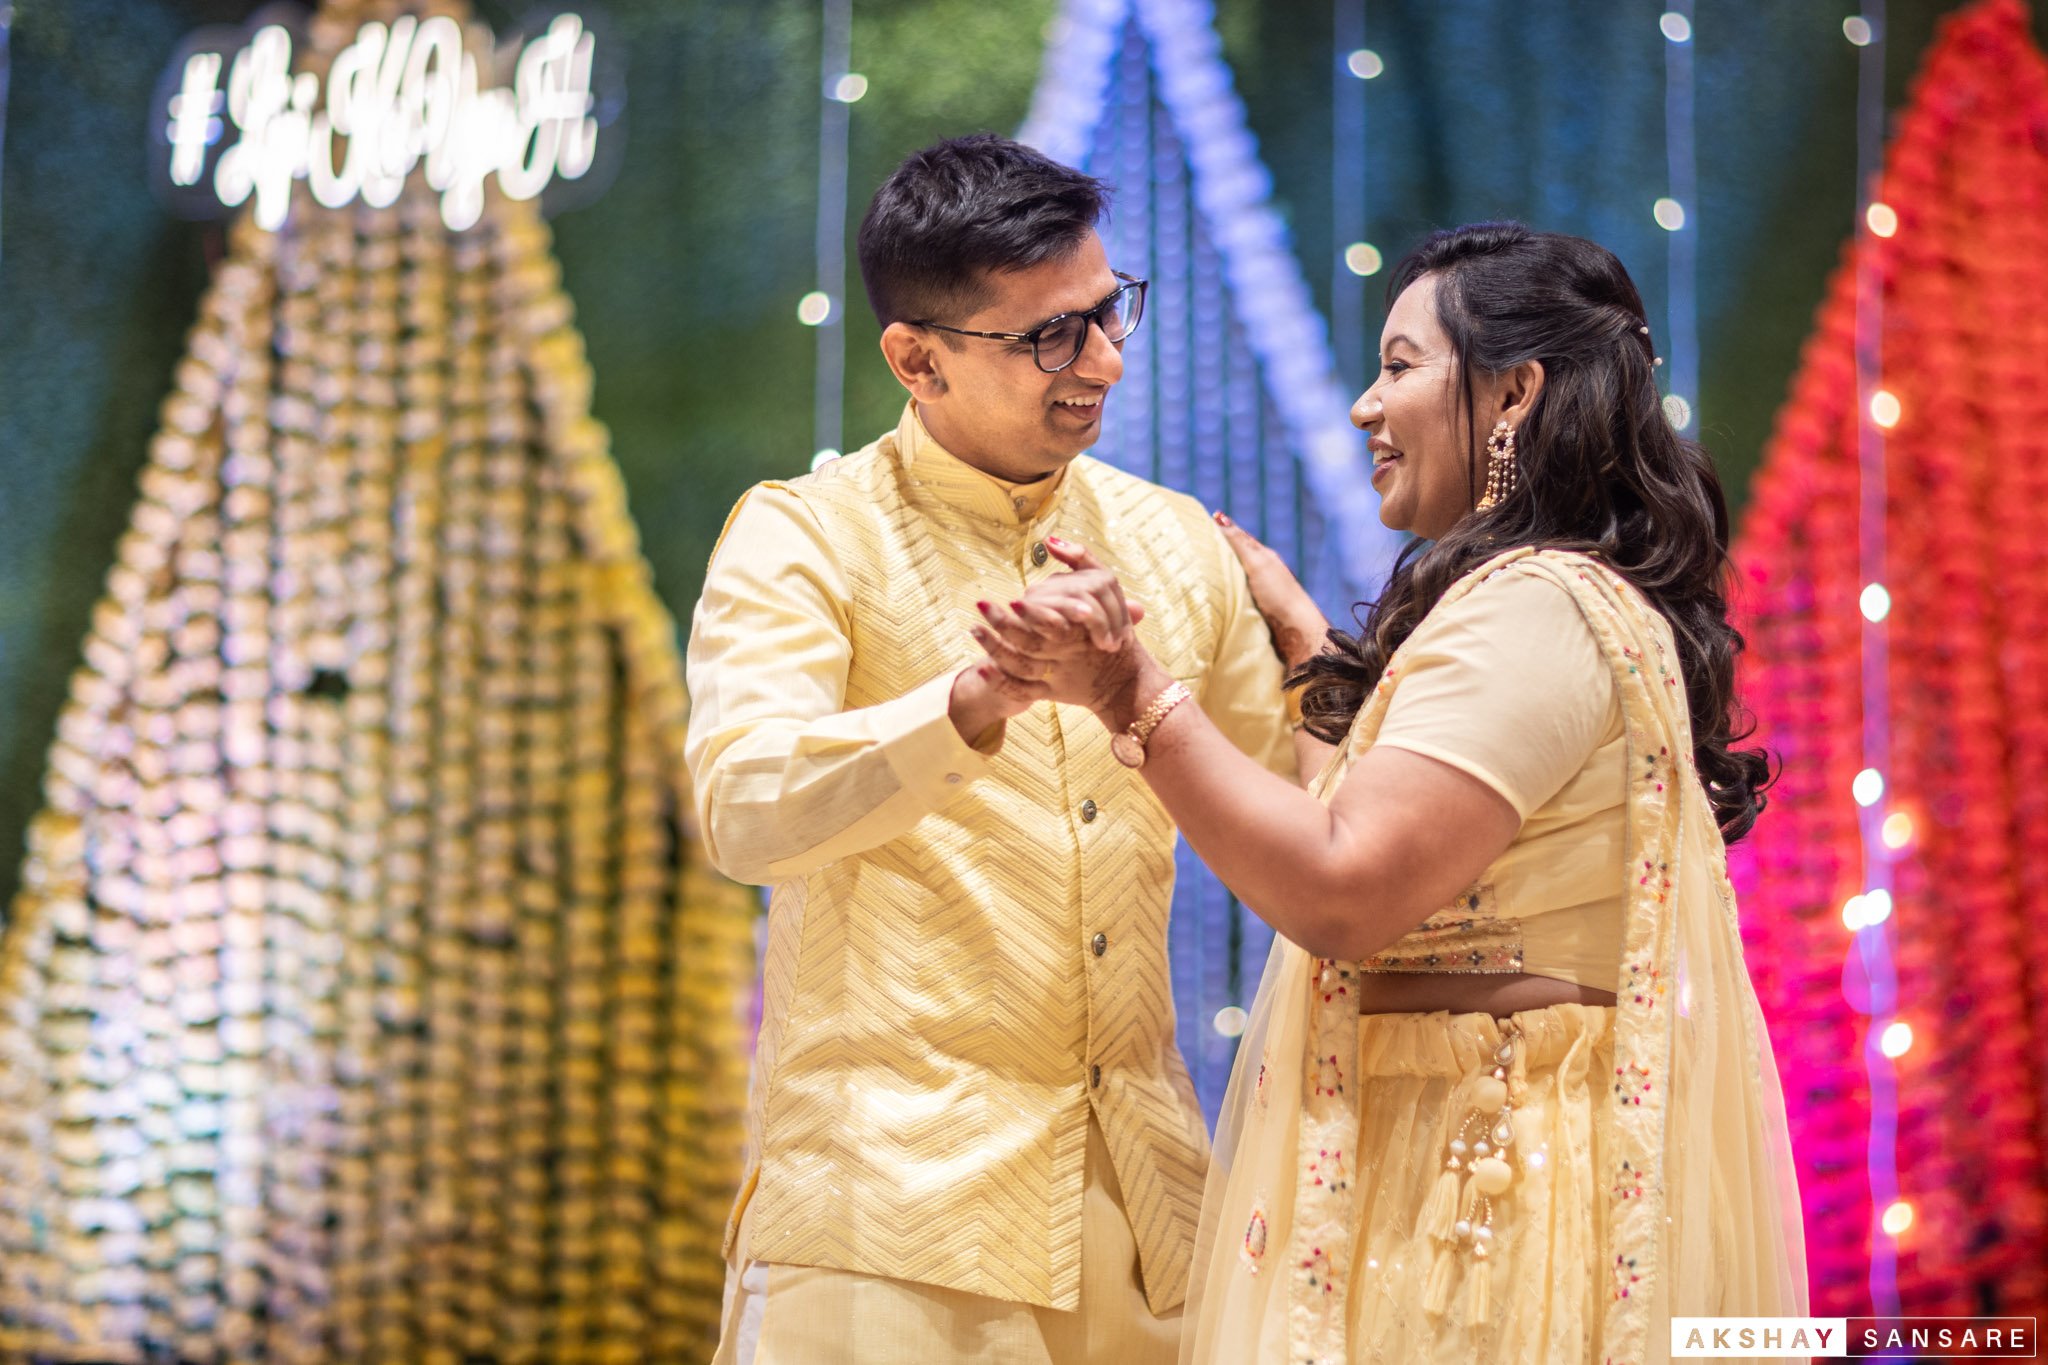 Lipika x Bhavya Compress Akshay Sansare Photography & Films Best wedding photographers in mumbai india-16.jpg